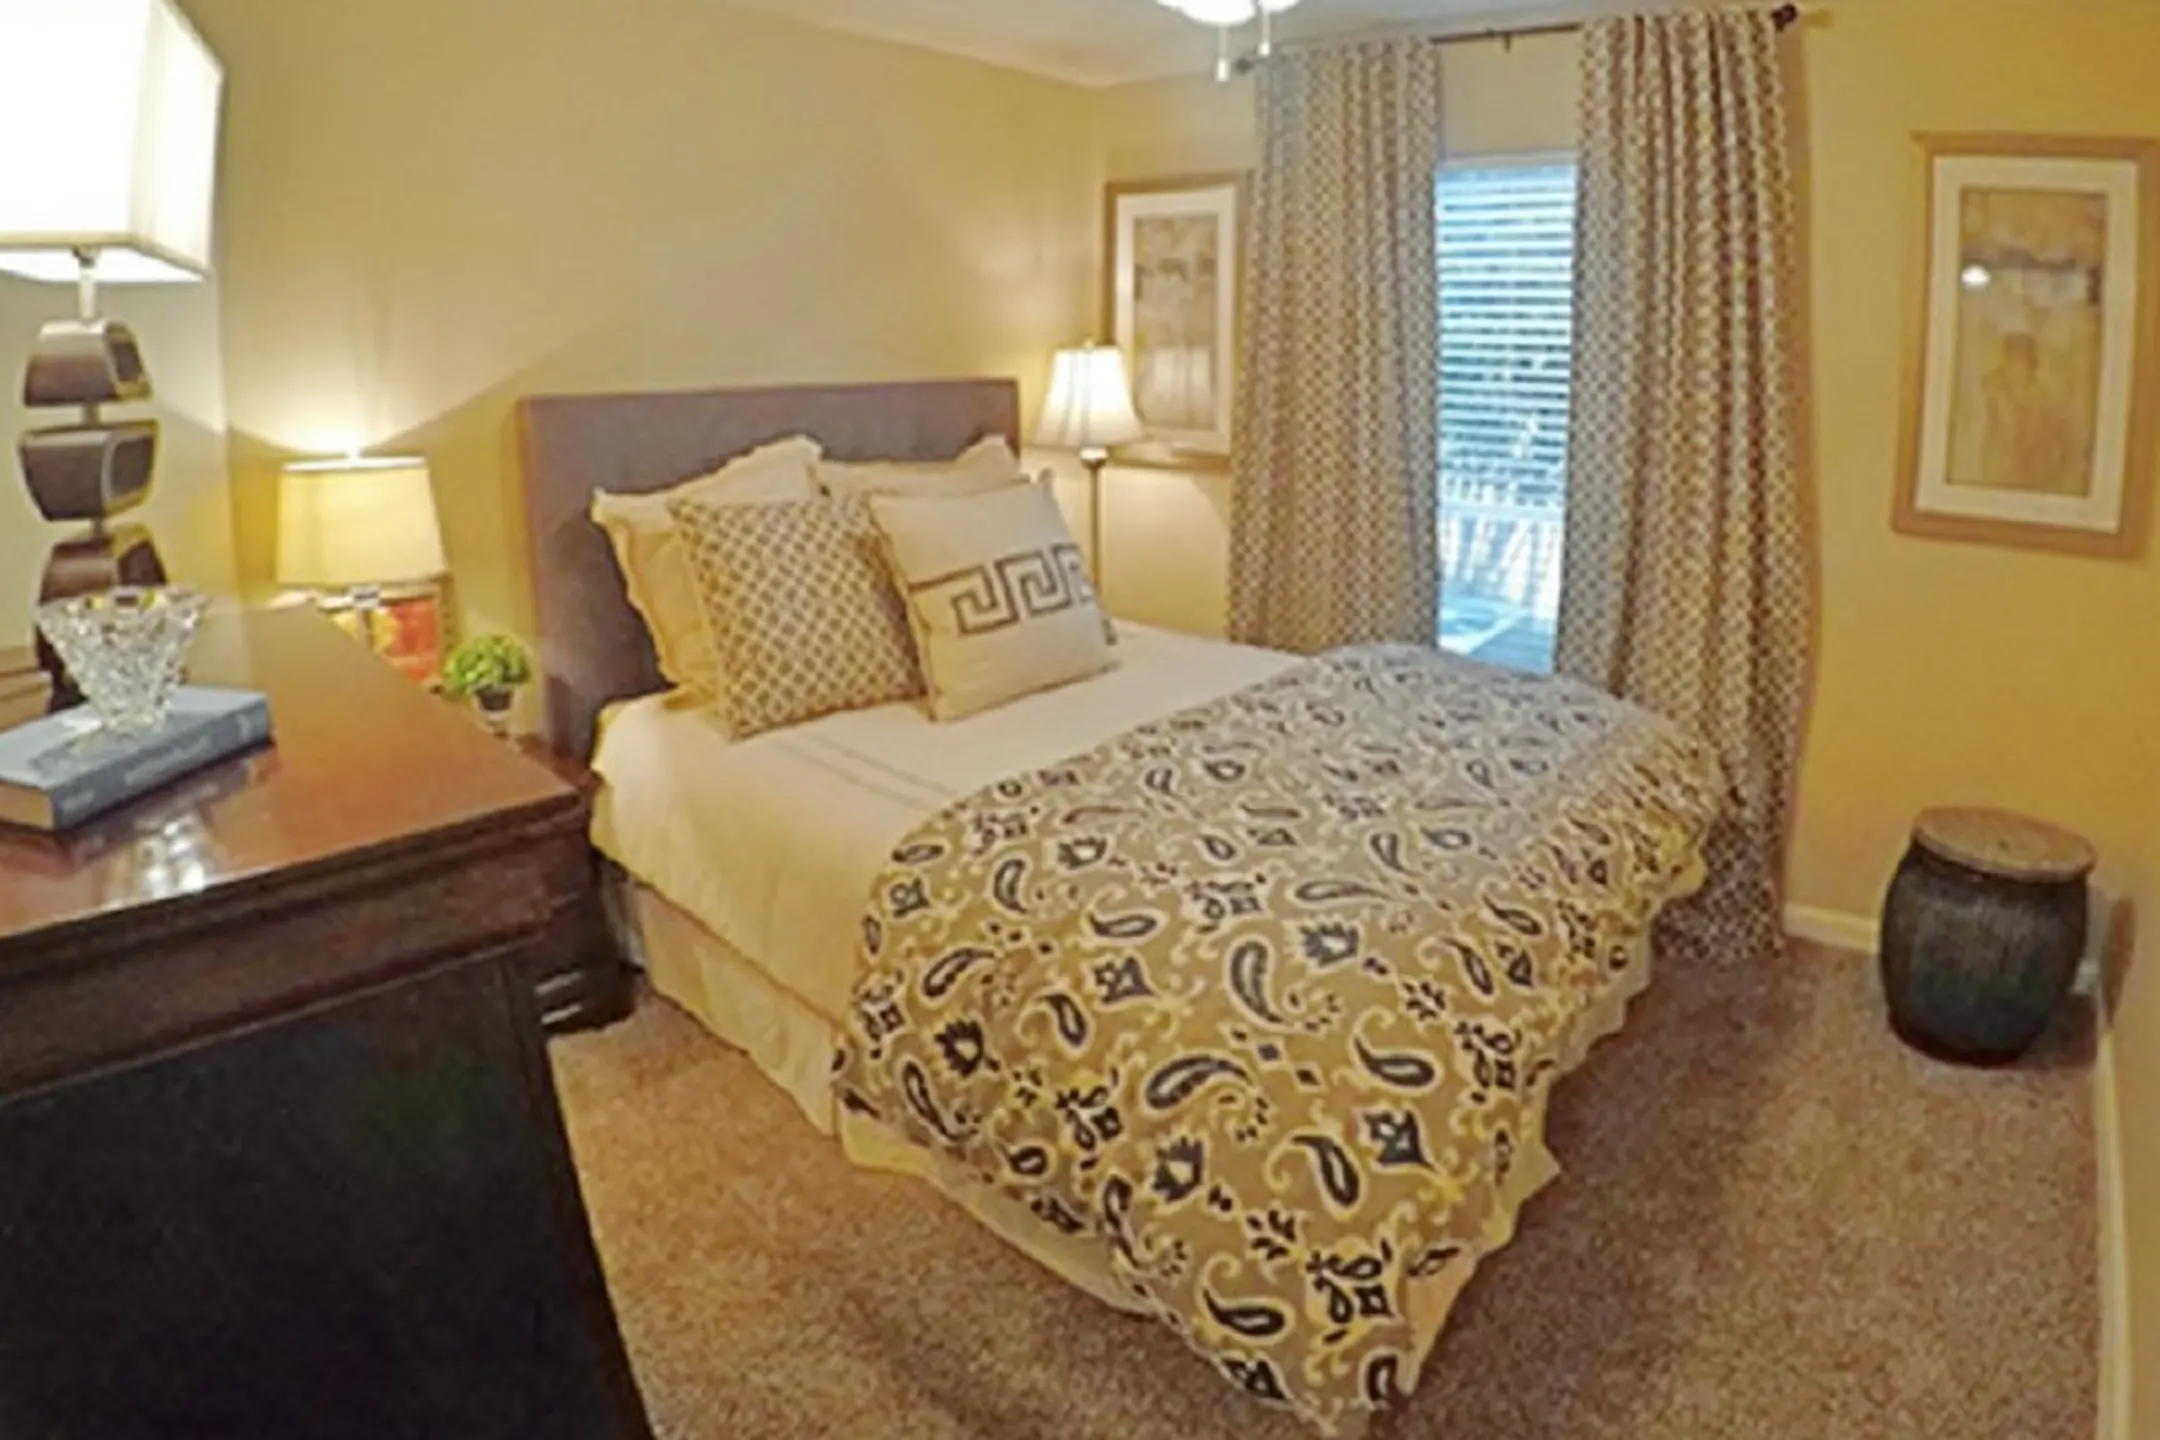 Bedroom - Millicent Crossing Apartments - Shreveport, LA